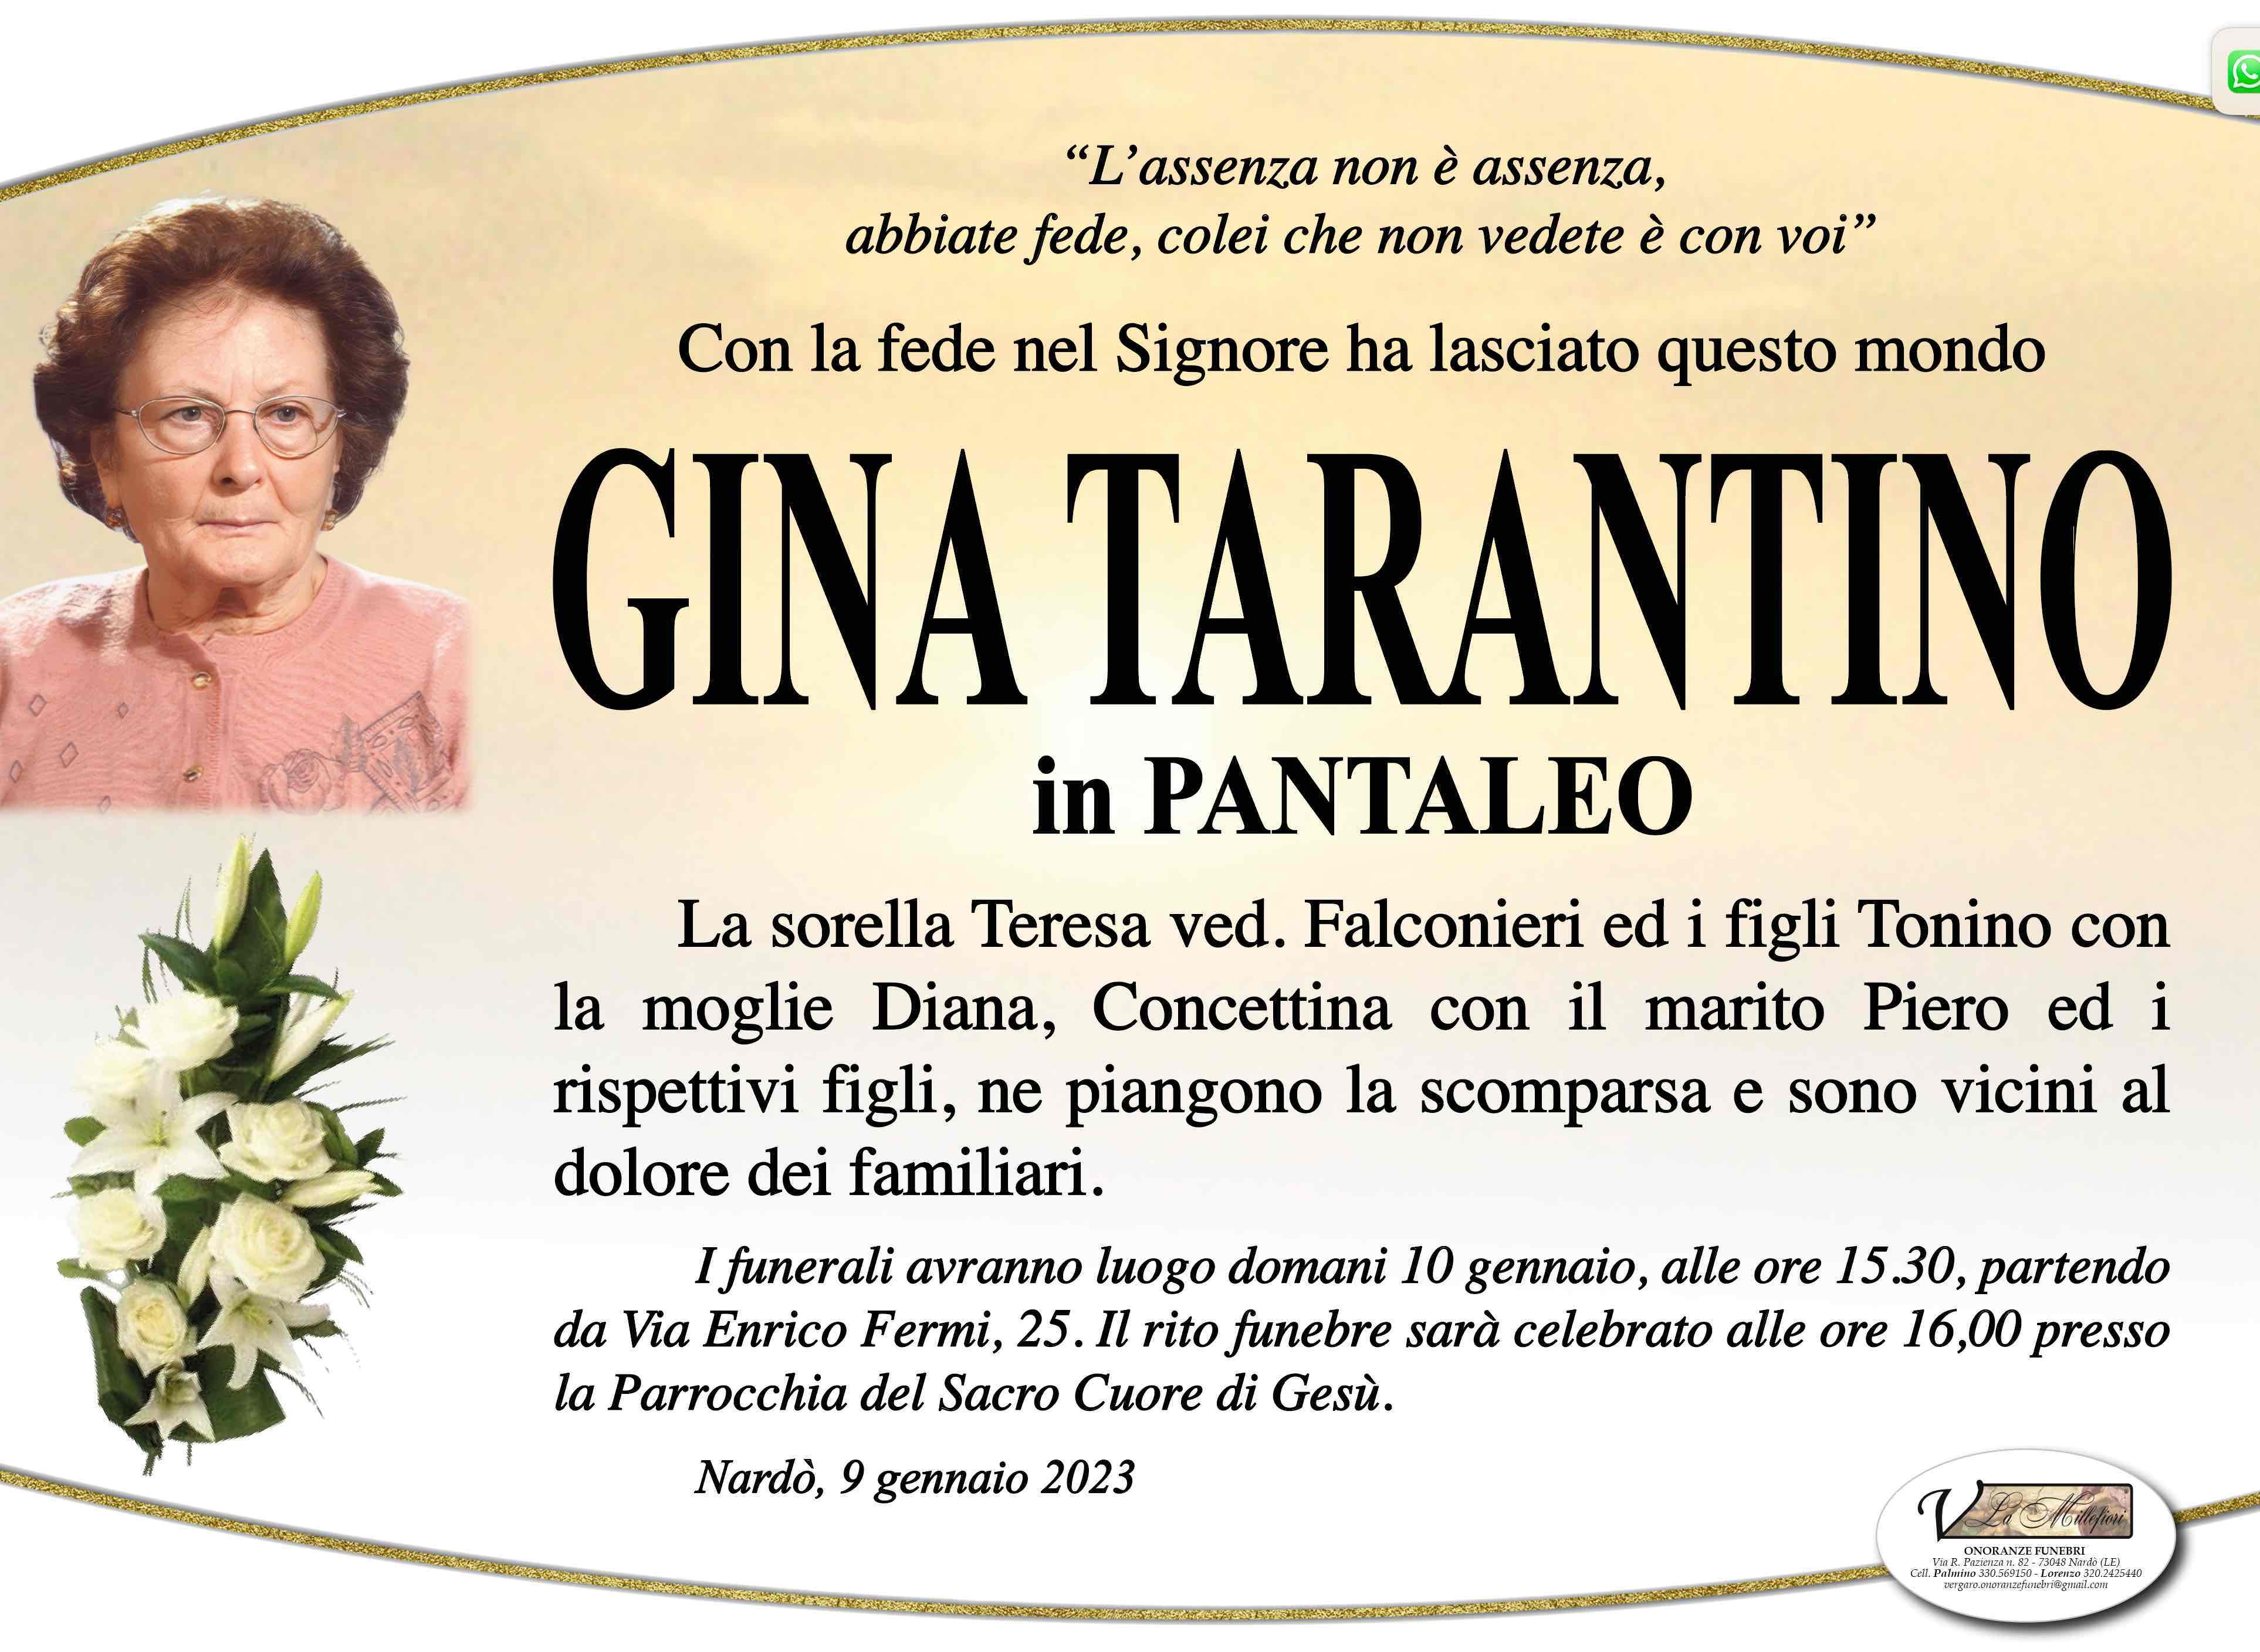 Gina Tarantino